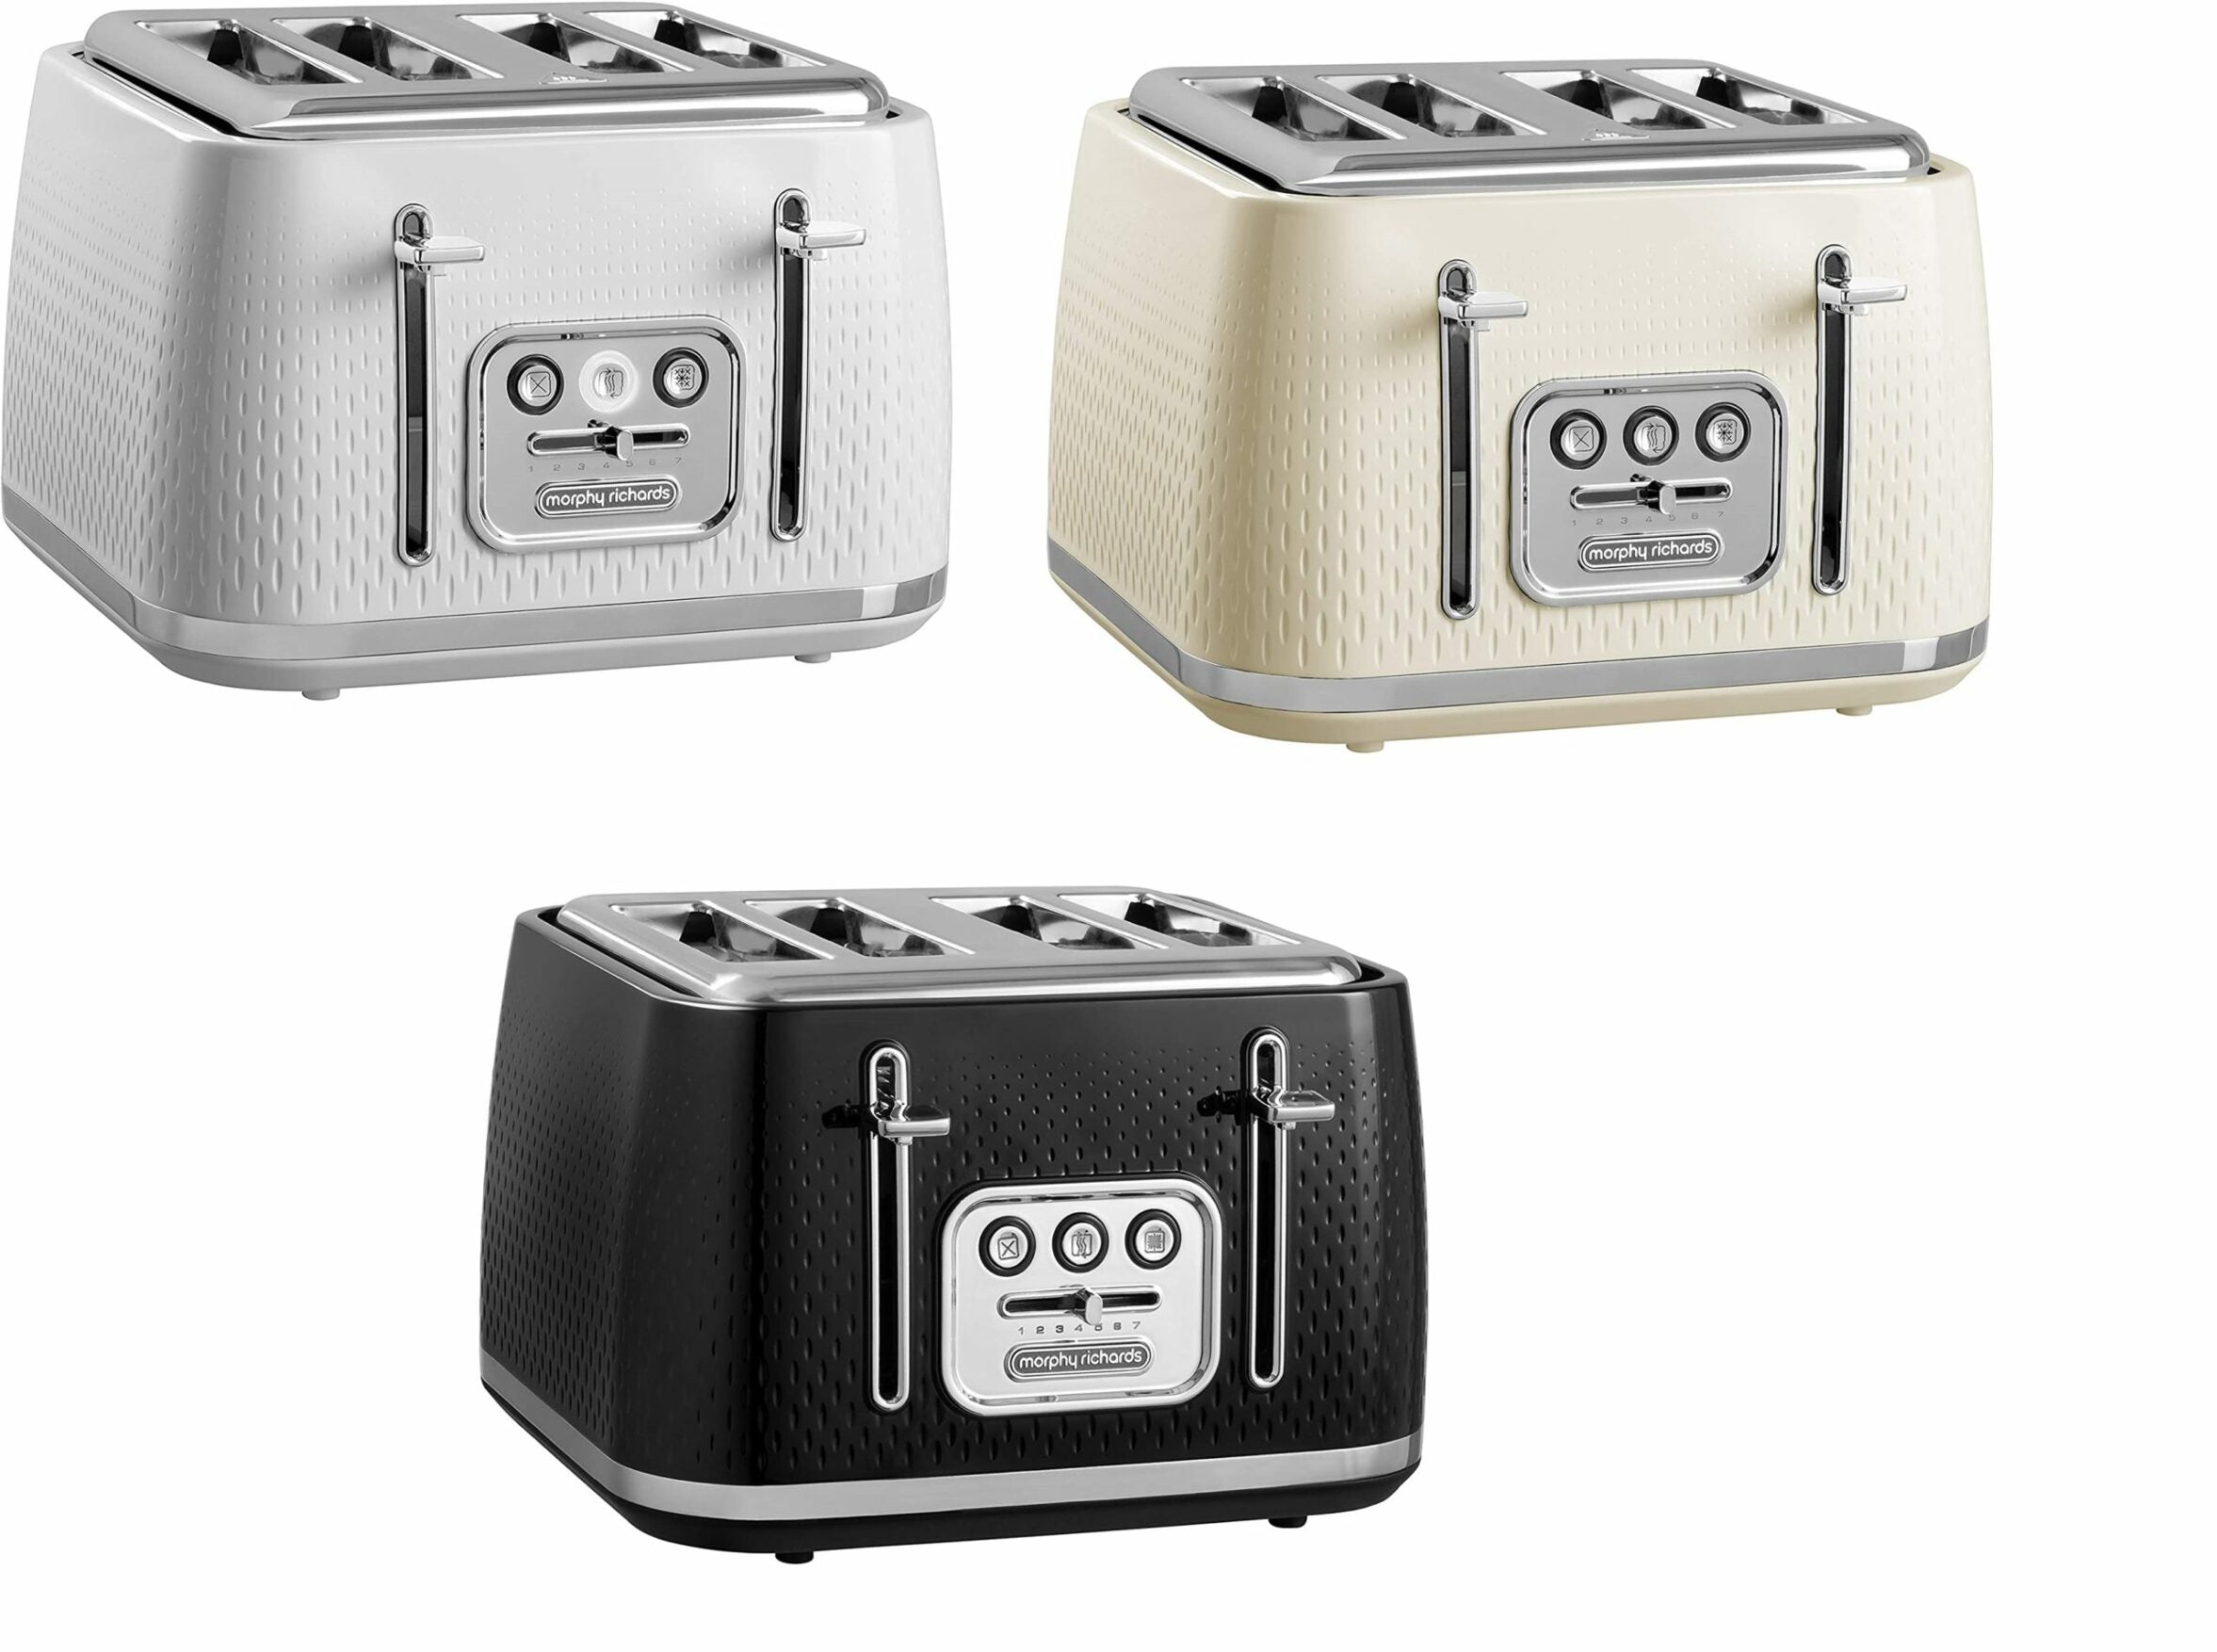 Morphy Richards Toaster - Black 243010 - Cream 243011 - White 243012